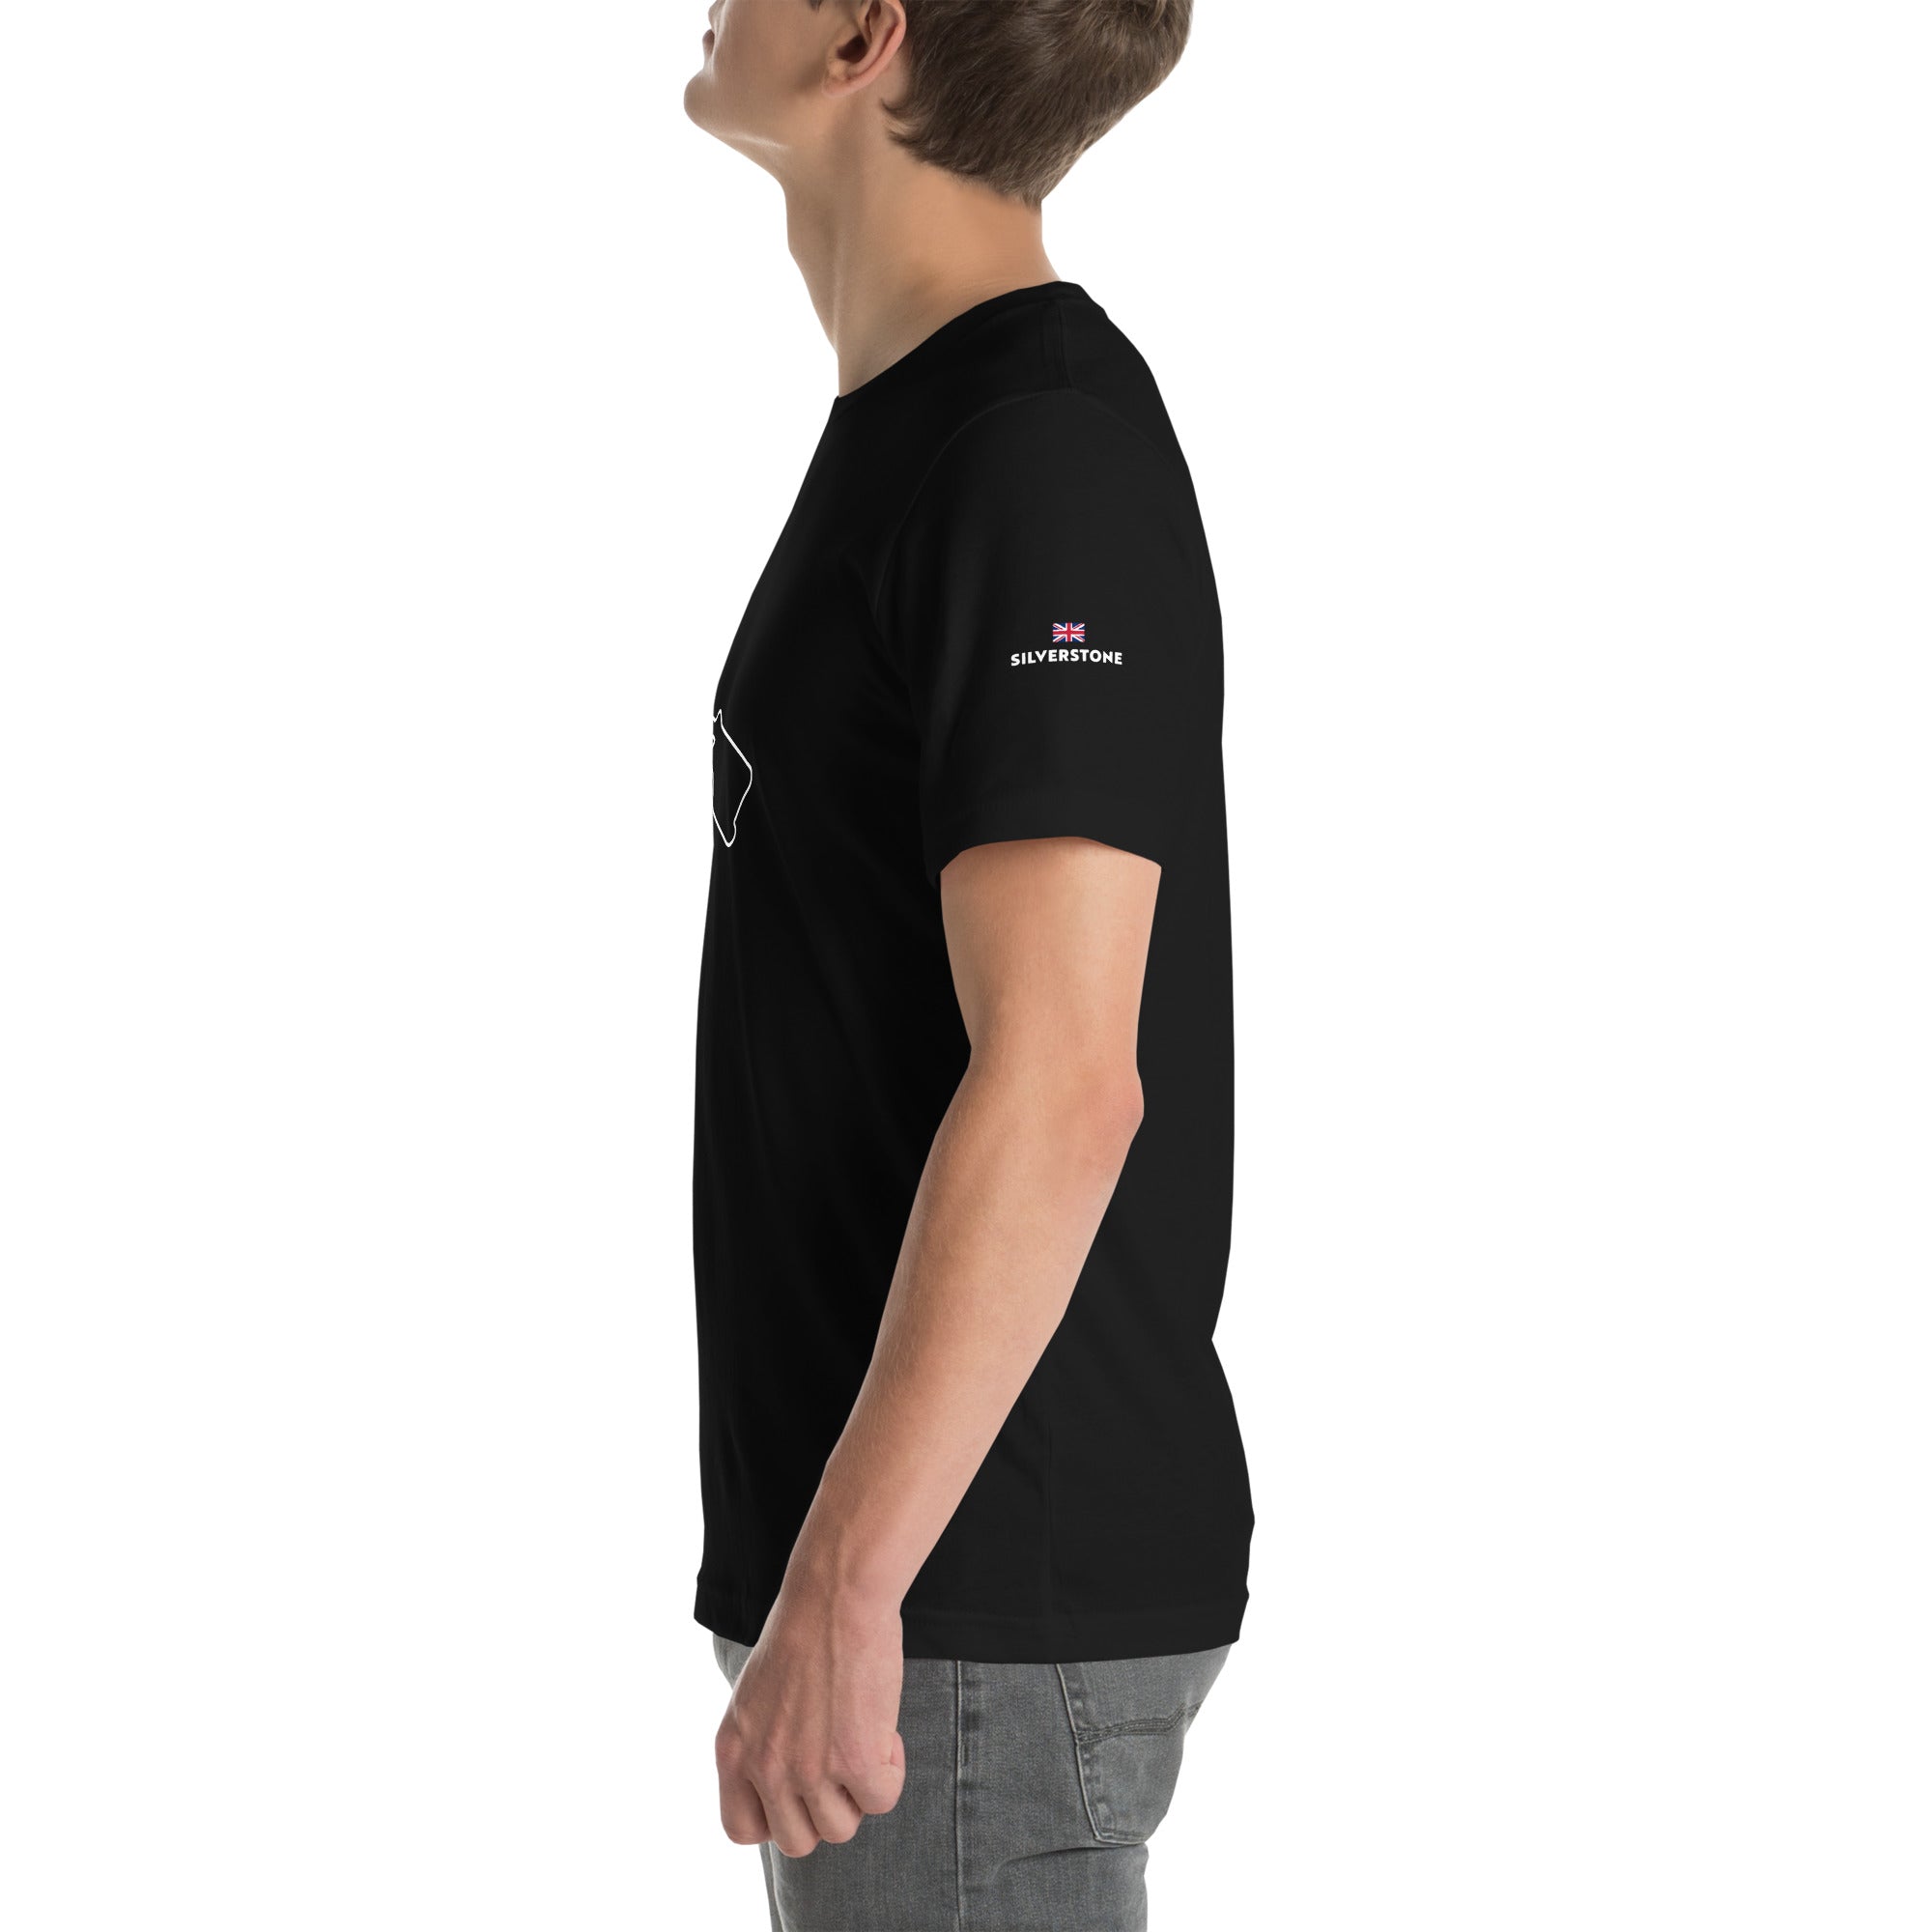 Silverstone: F1 Historic Circuit - Unisex T-Shirt black side